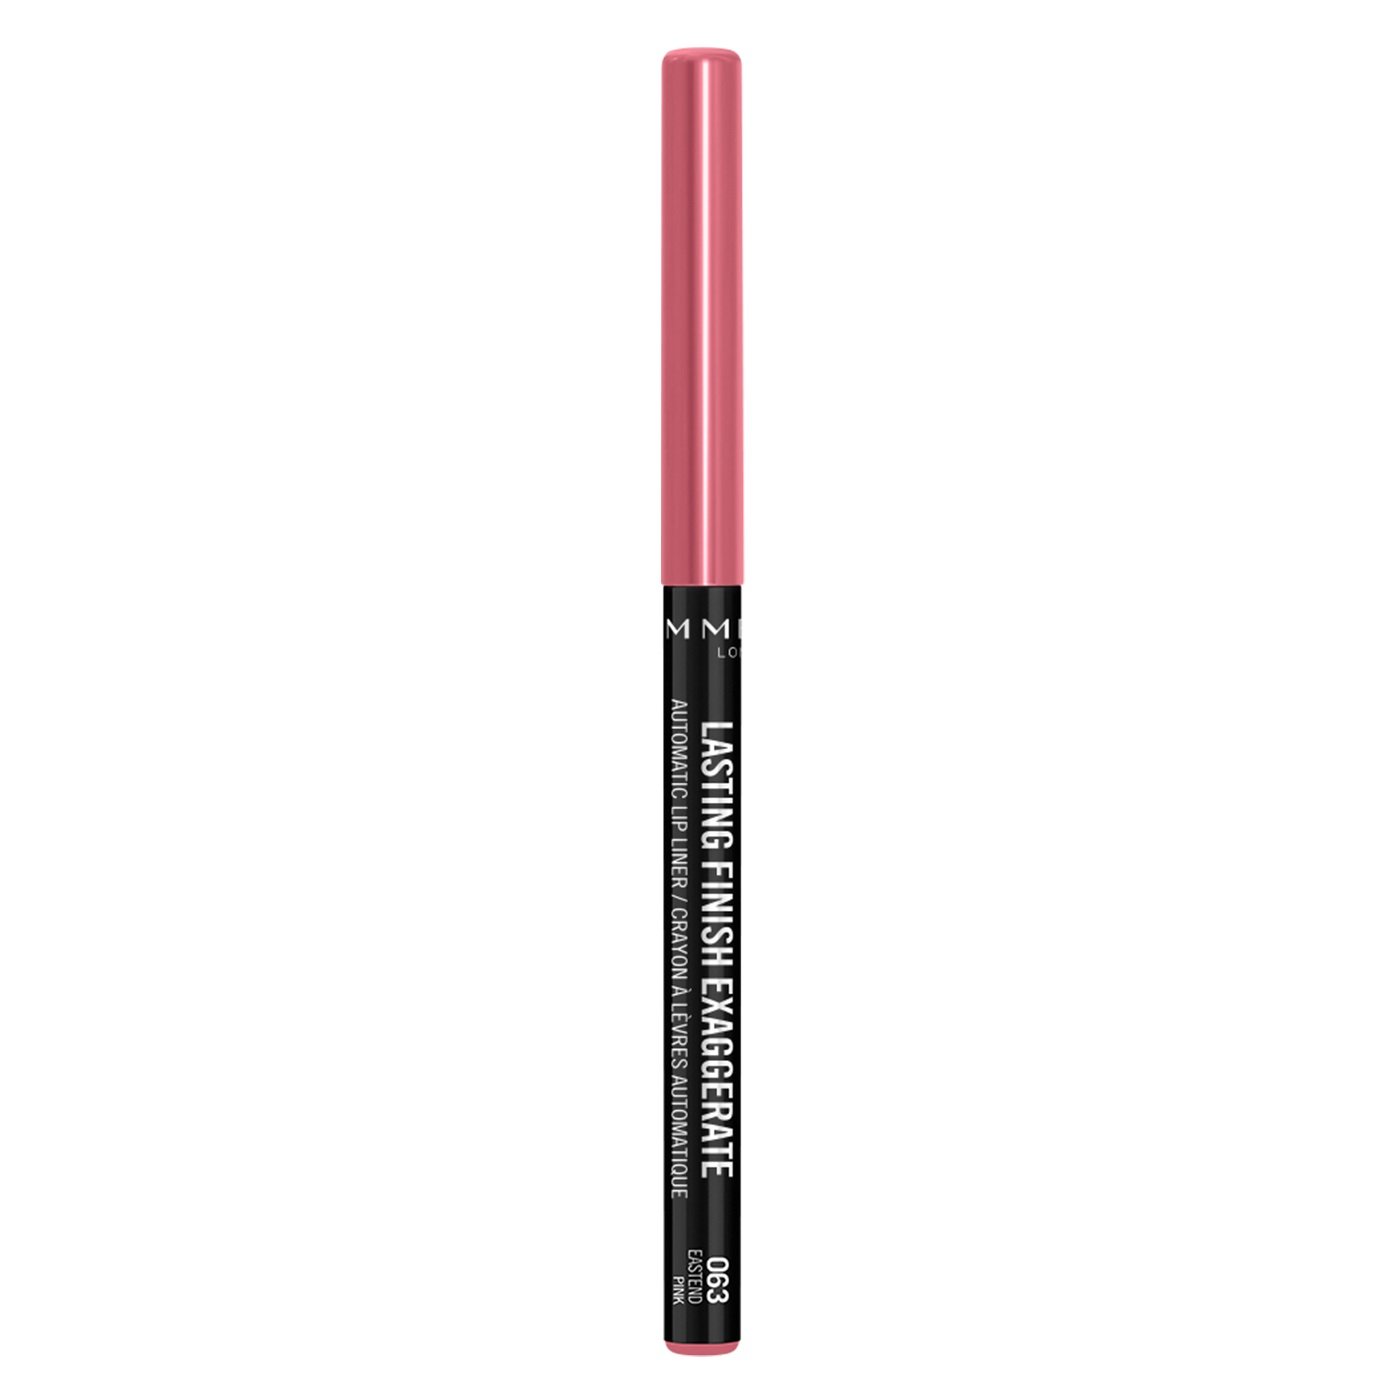 Олівець для губ Rimmel Lasting Finish Exaggerate, відтінок 063 (Eastend Pink), 0,35 г (8000019858679) - фото 1